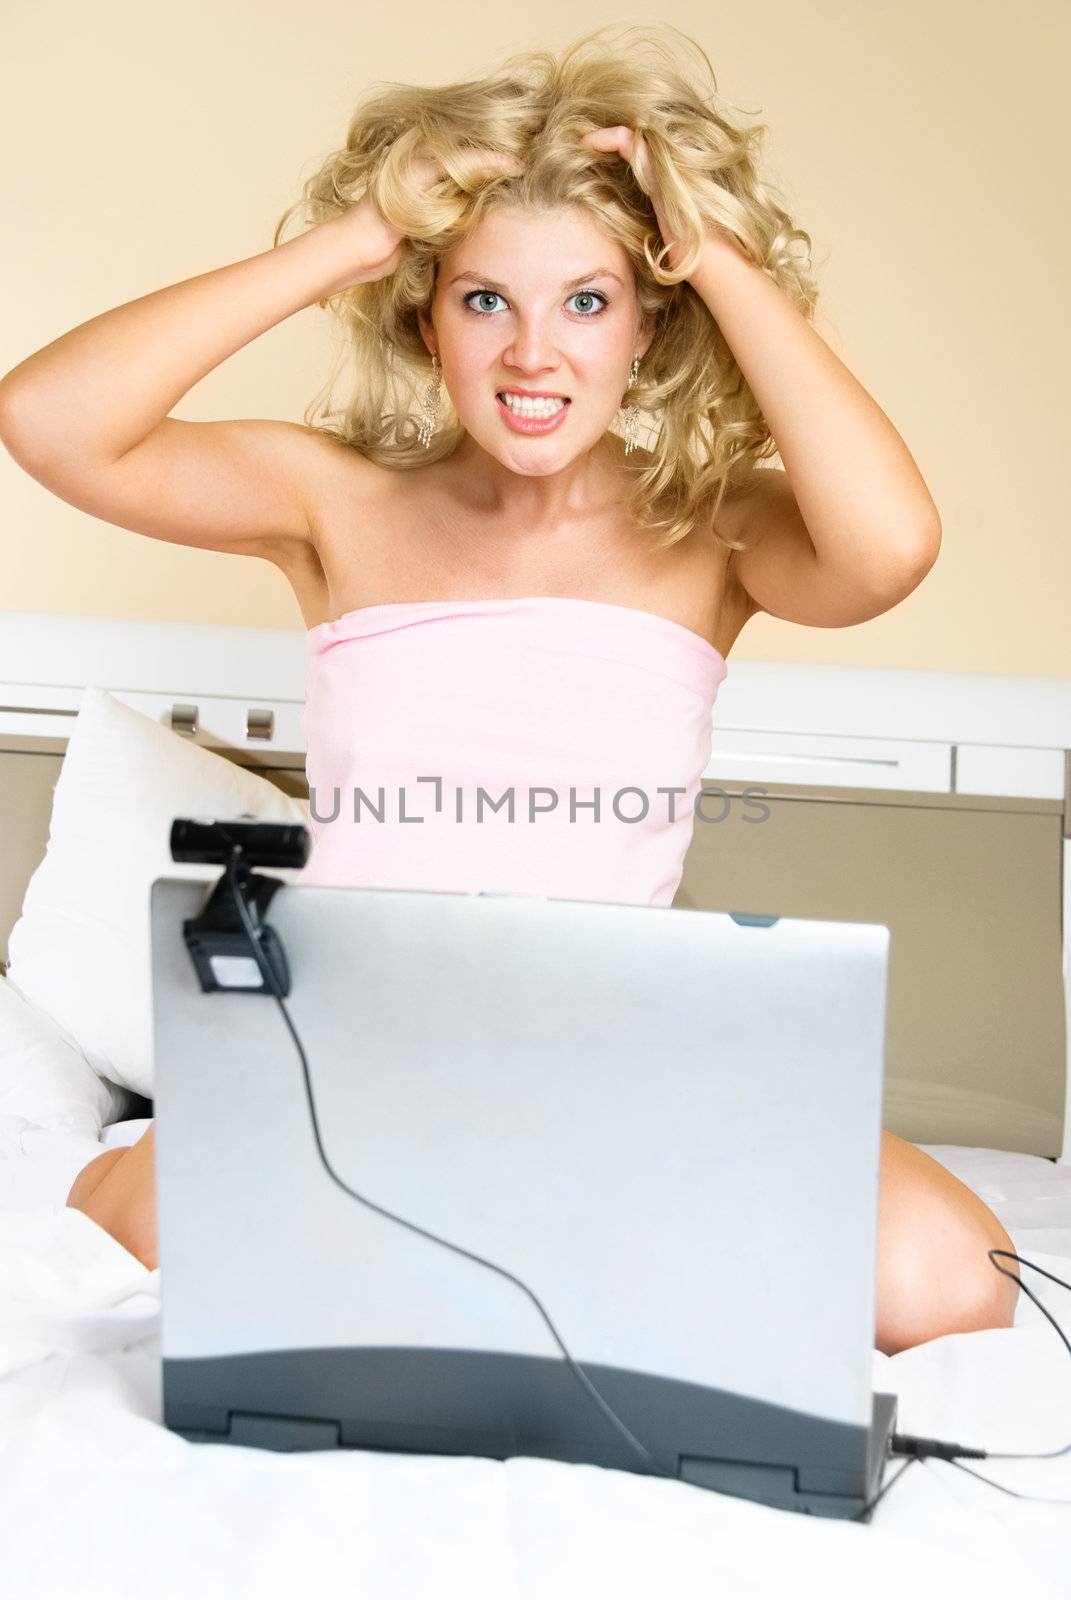 shocked girl communicating using a web camera by lanak